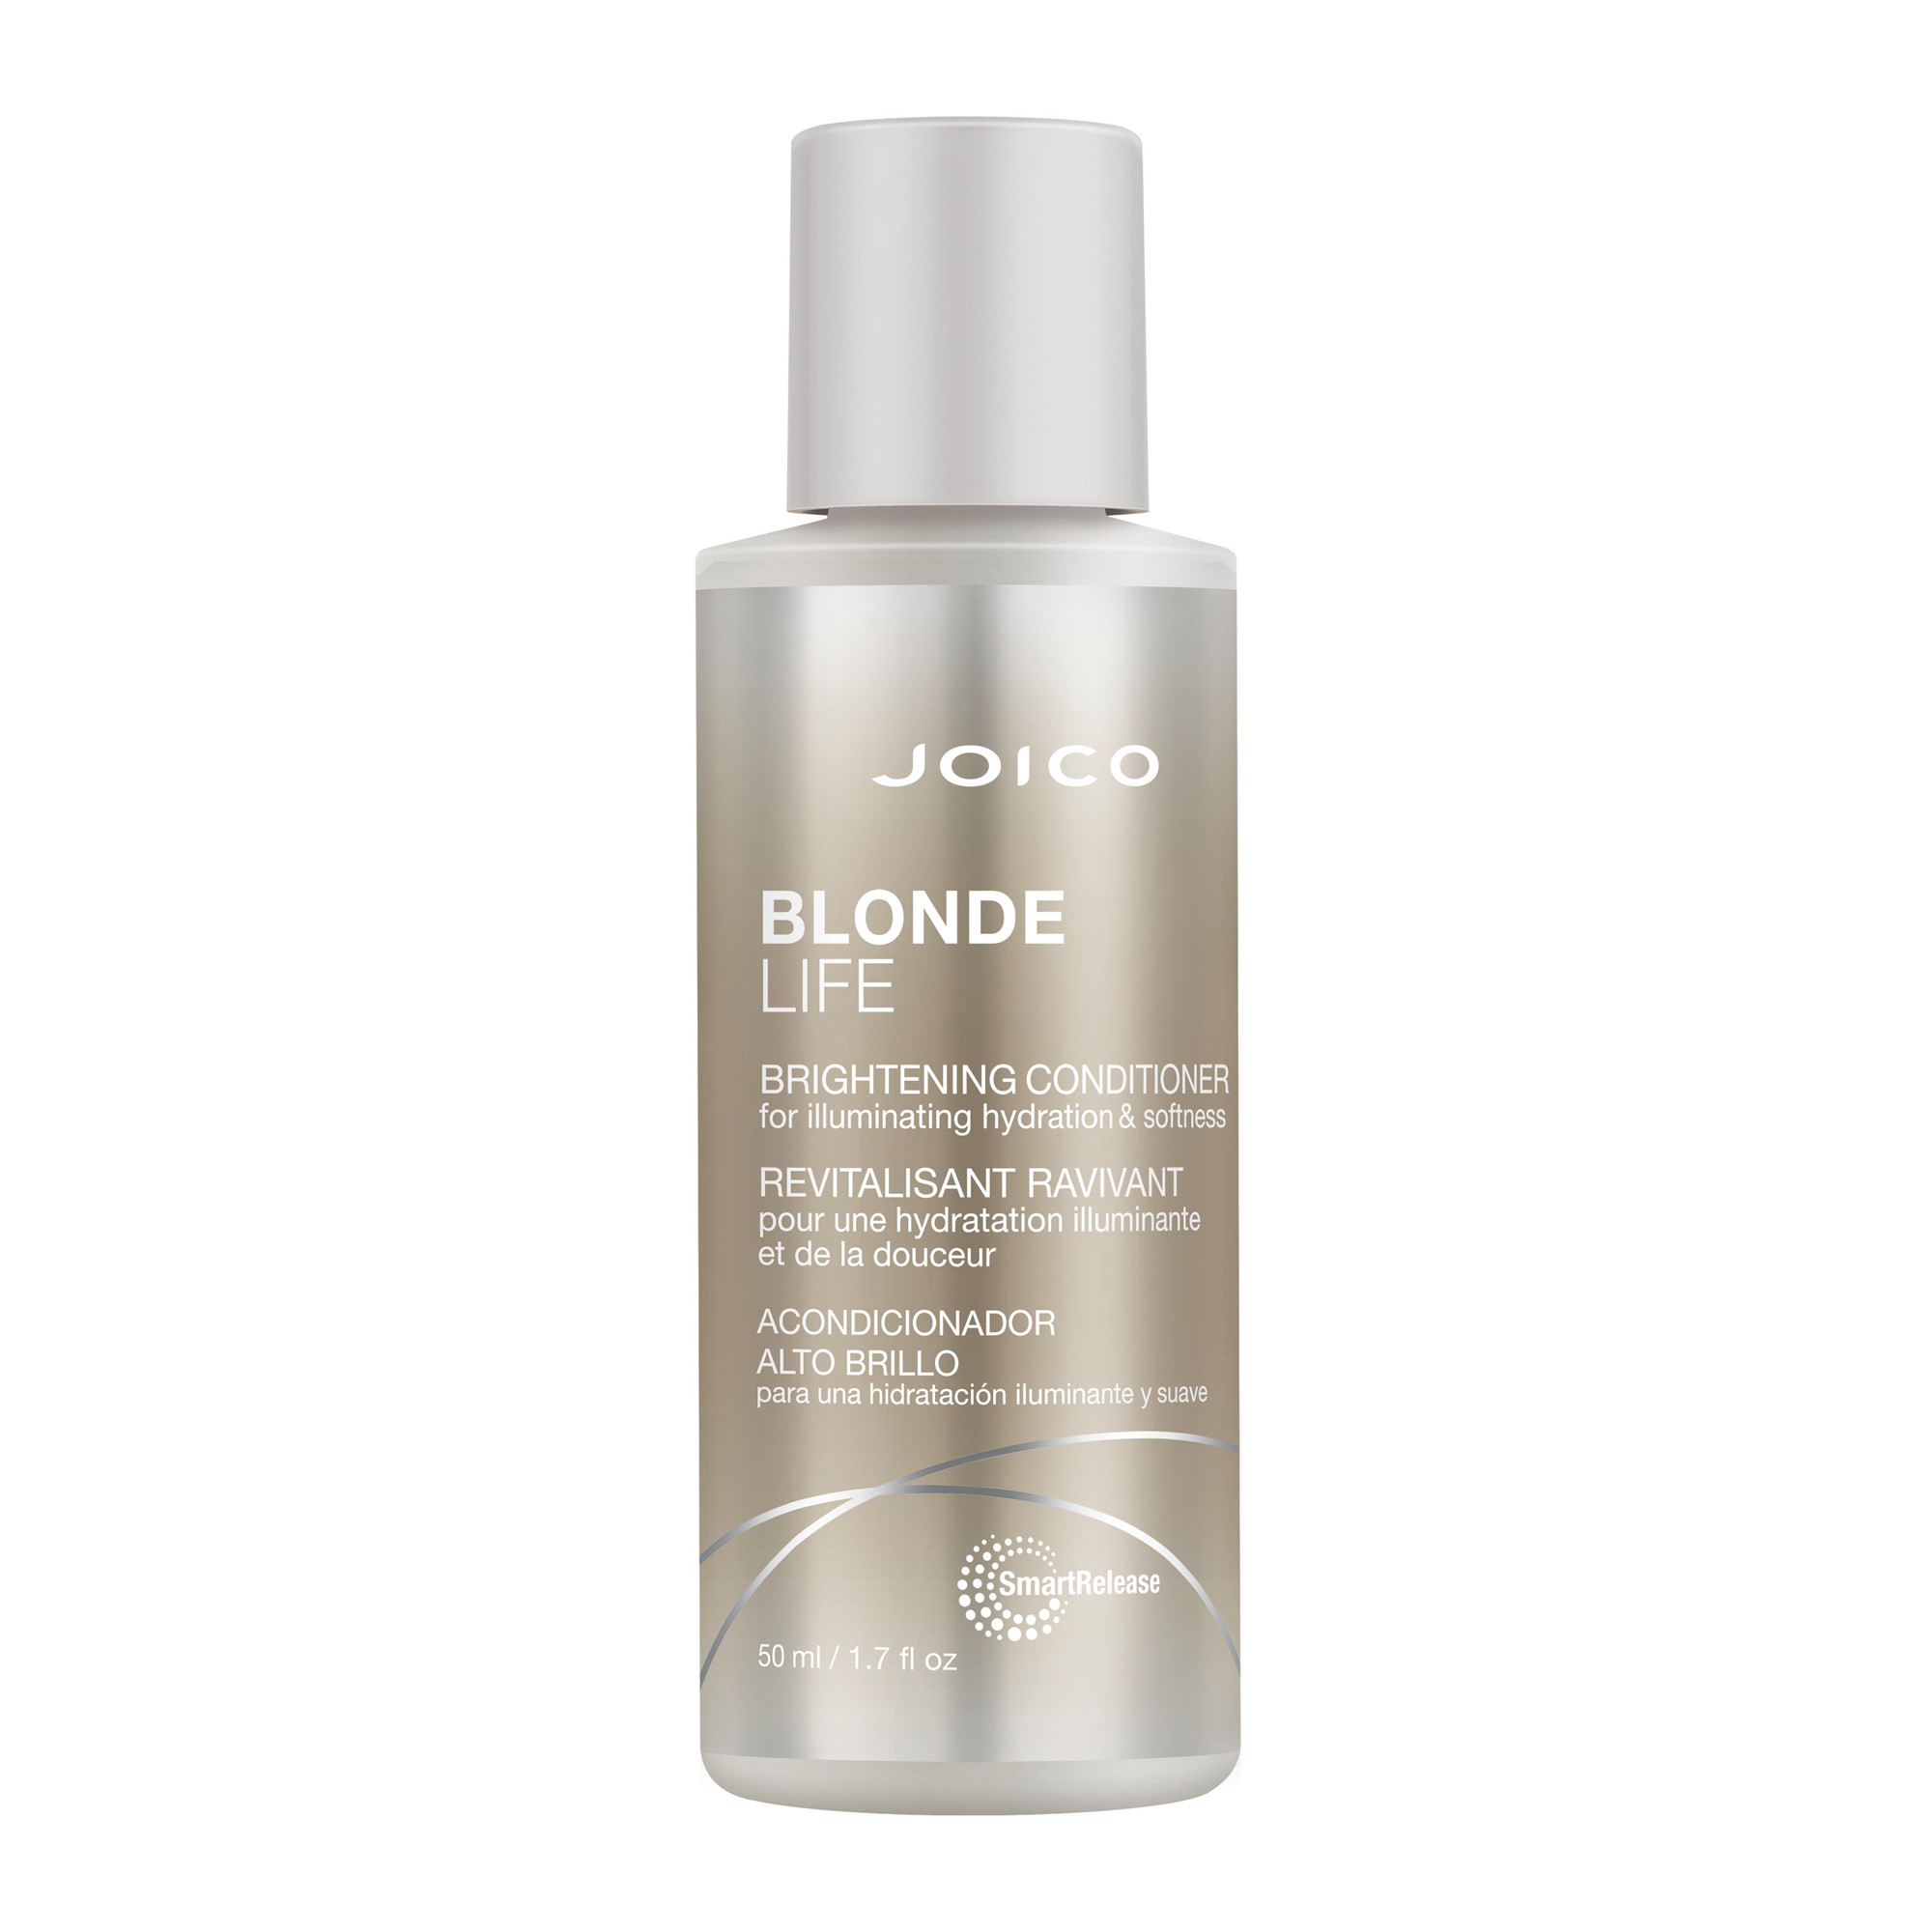 Joico Blonde Life Brightening Conditioner - Кондиционер для сохранения яркости блонда